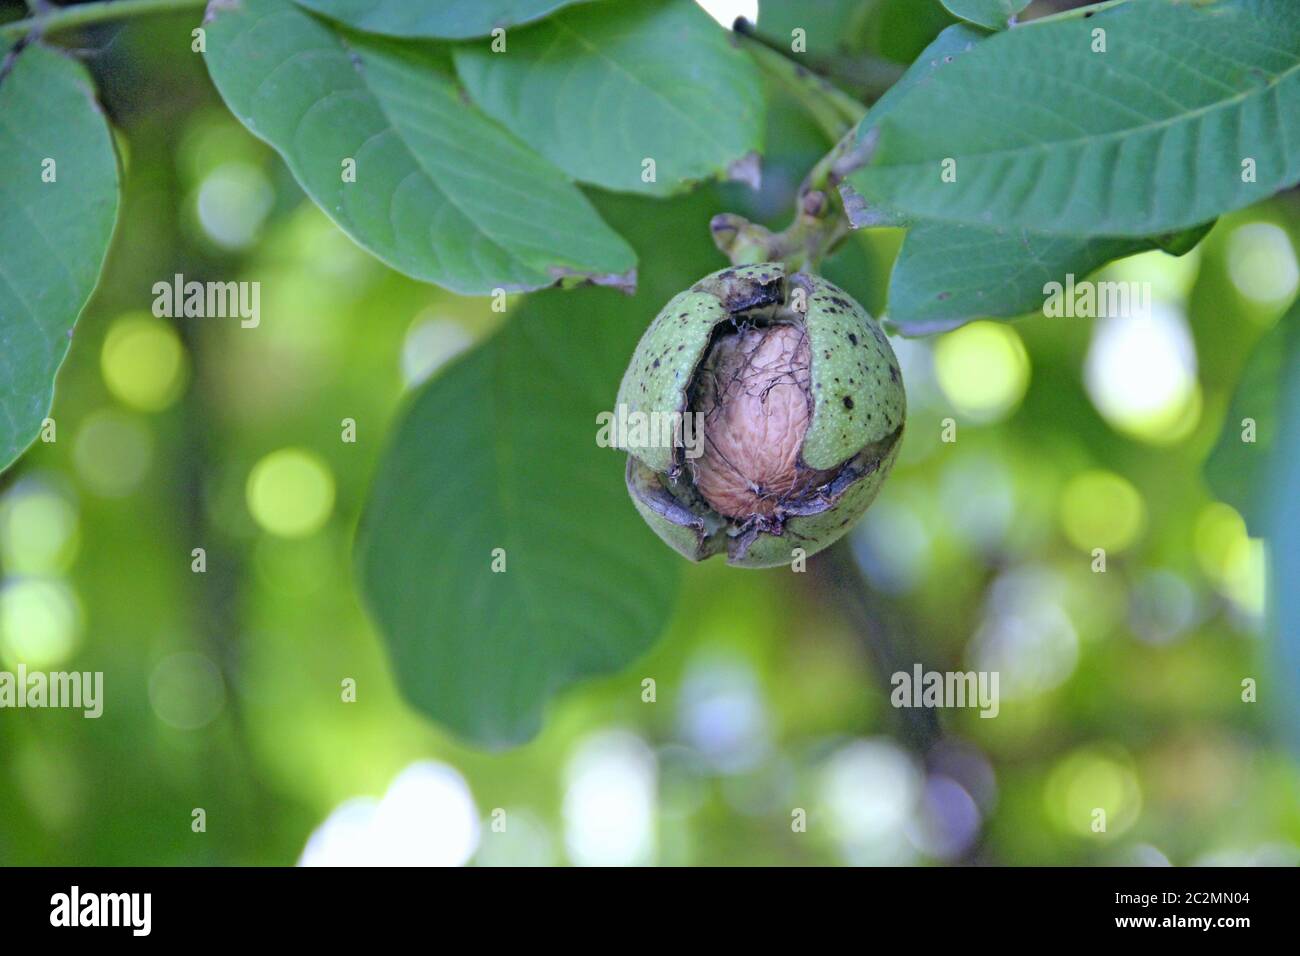 Ripe walnut on branch with green leaves. Juglans regia fruit ripening among green foliage on tree Stock Photo